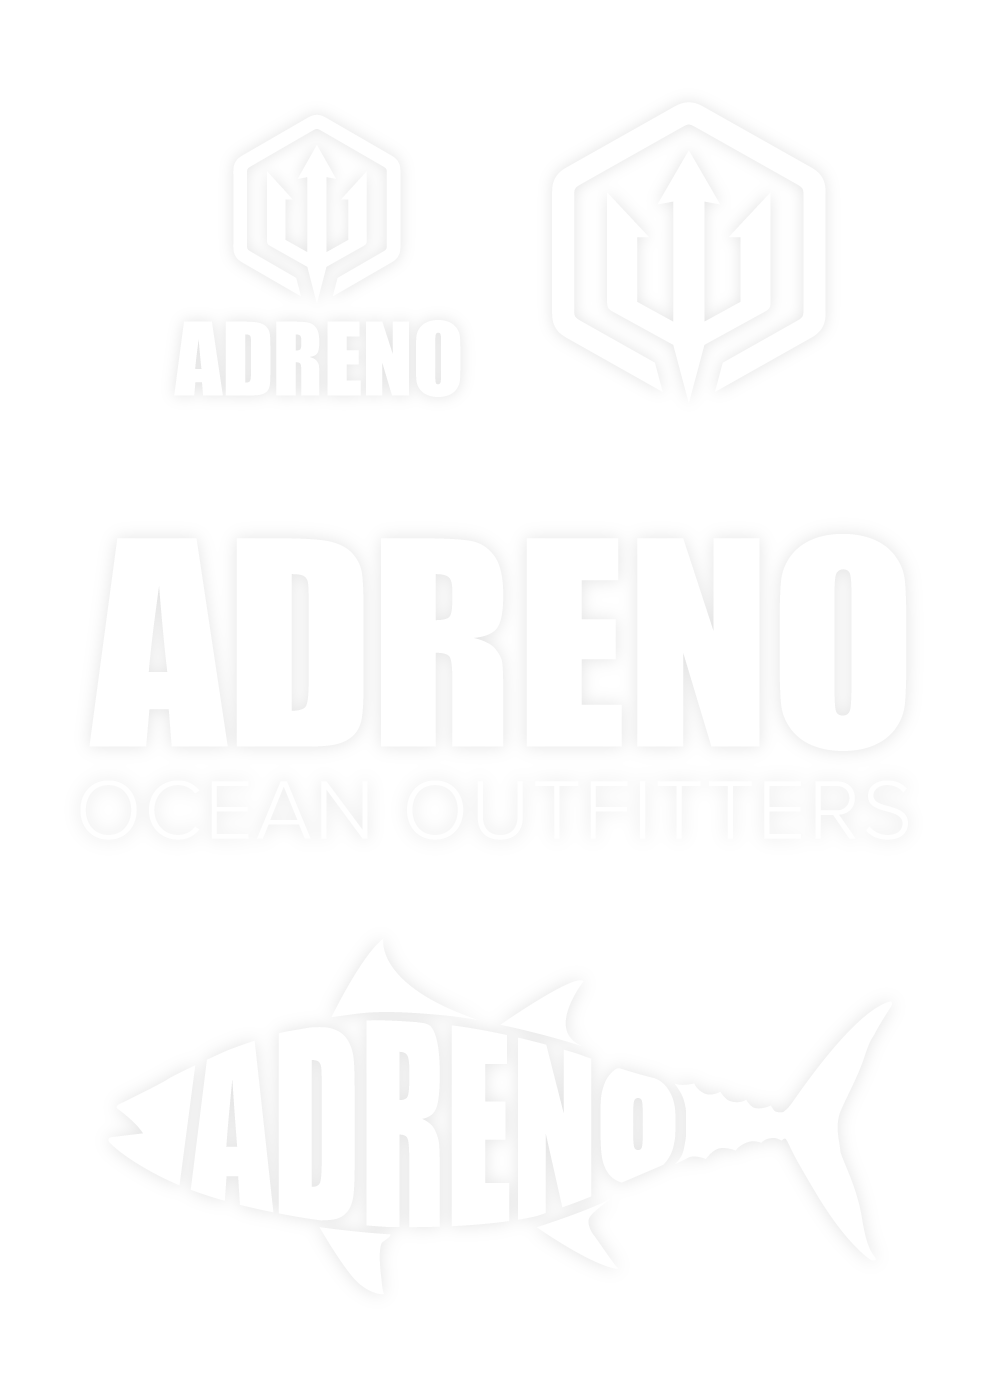 Adreno Ocean Outfitters sticker sheet